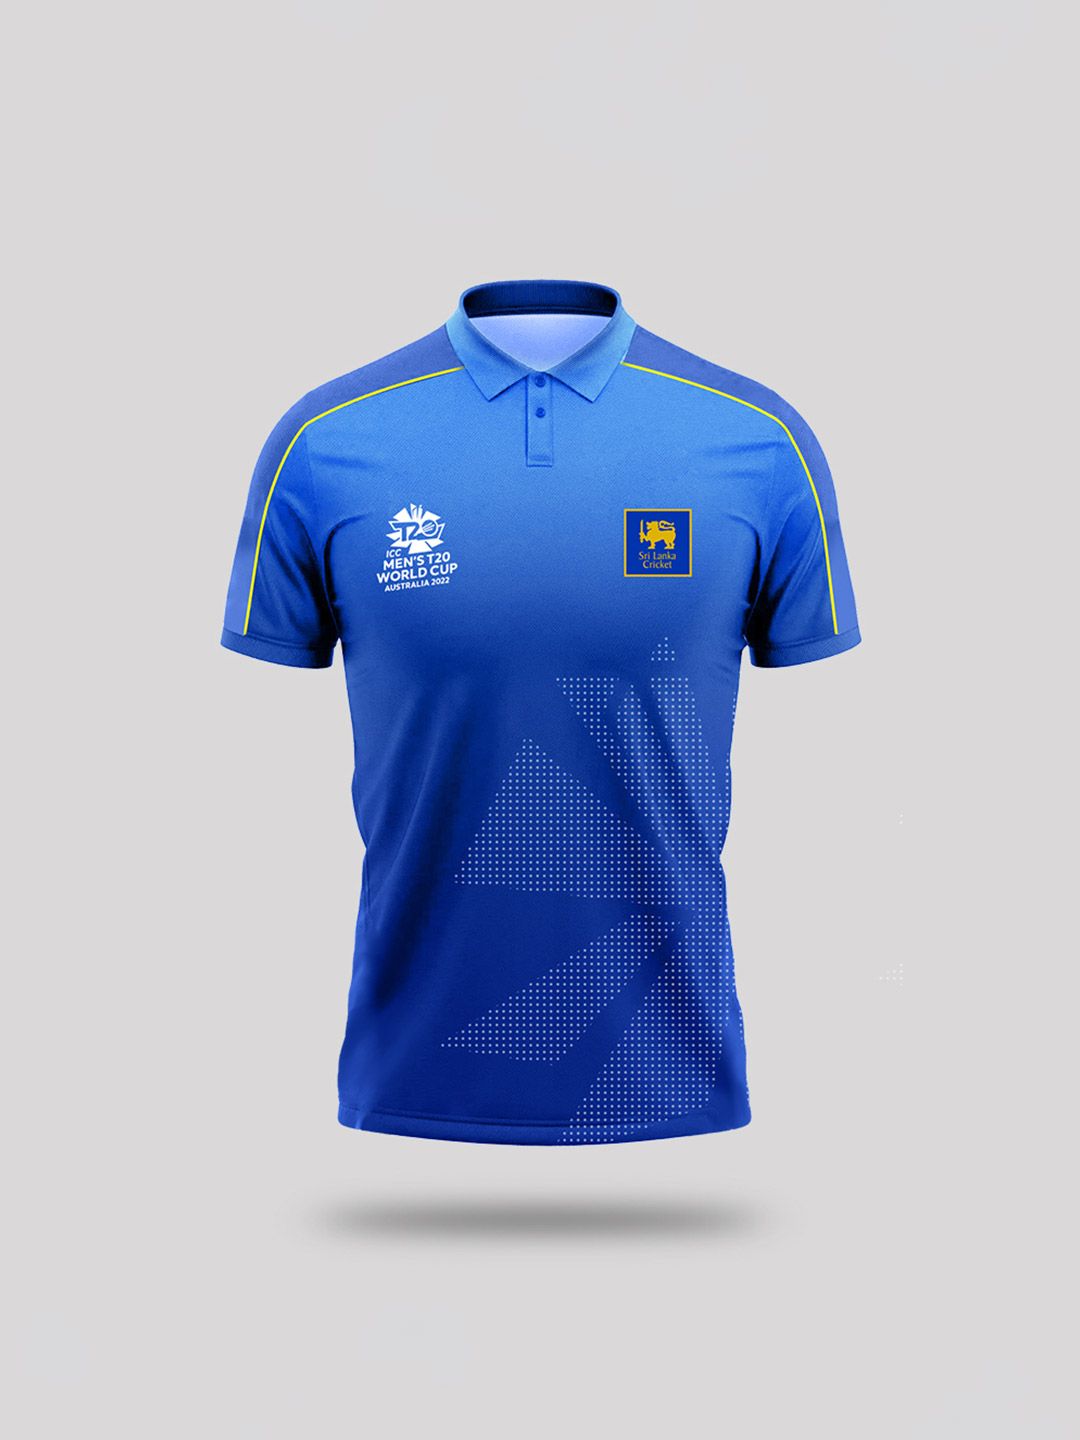 Sri Lanka Cricket Team Jersey